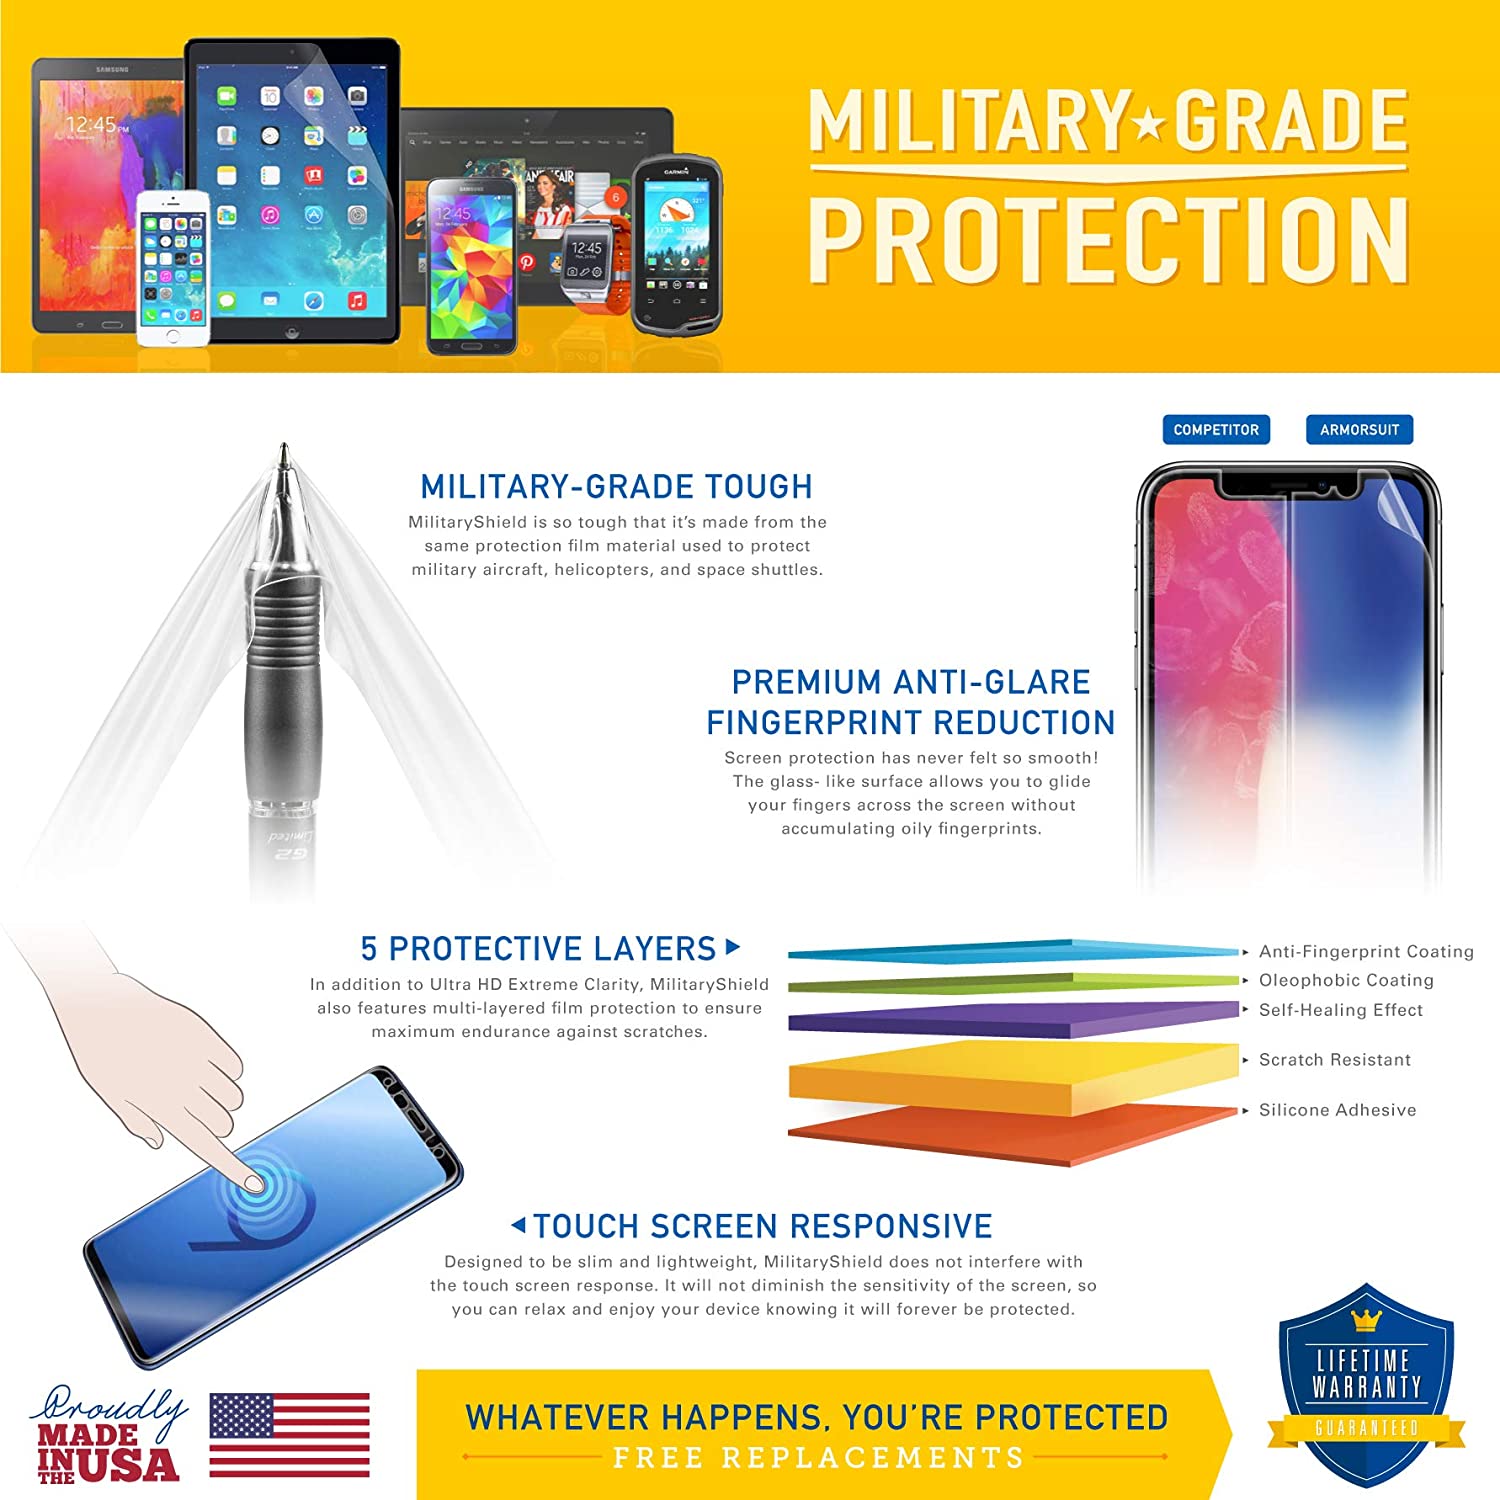 Samsung Galaxy Tab S 10.5 Screen Protector + White Carbon Fiber Film Protector